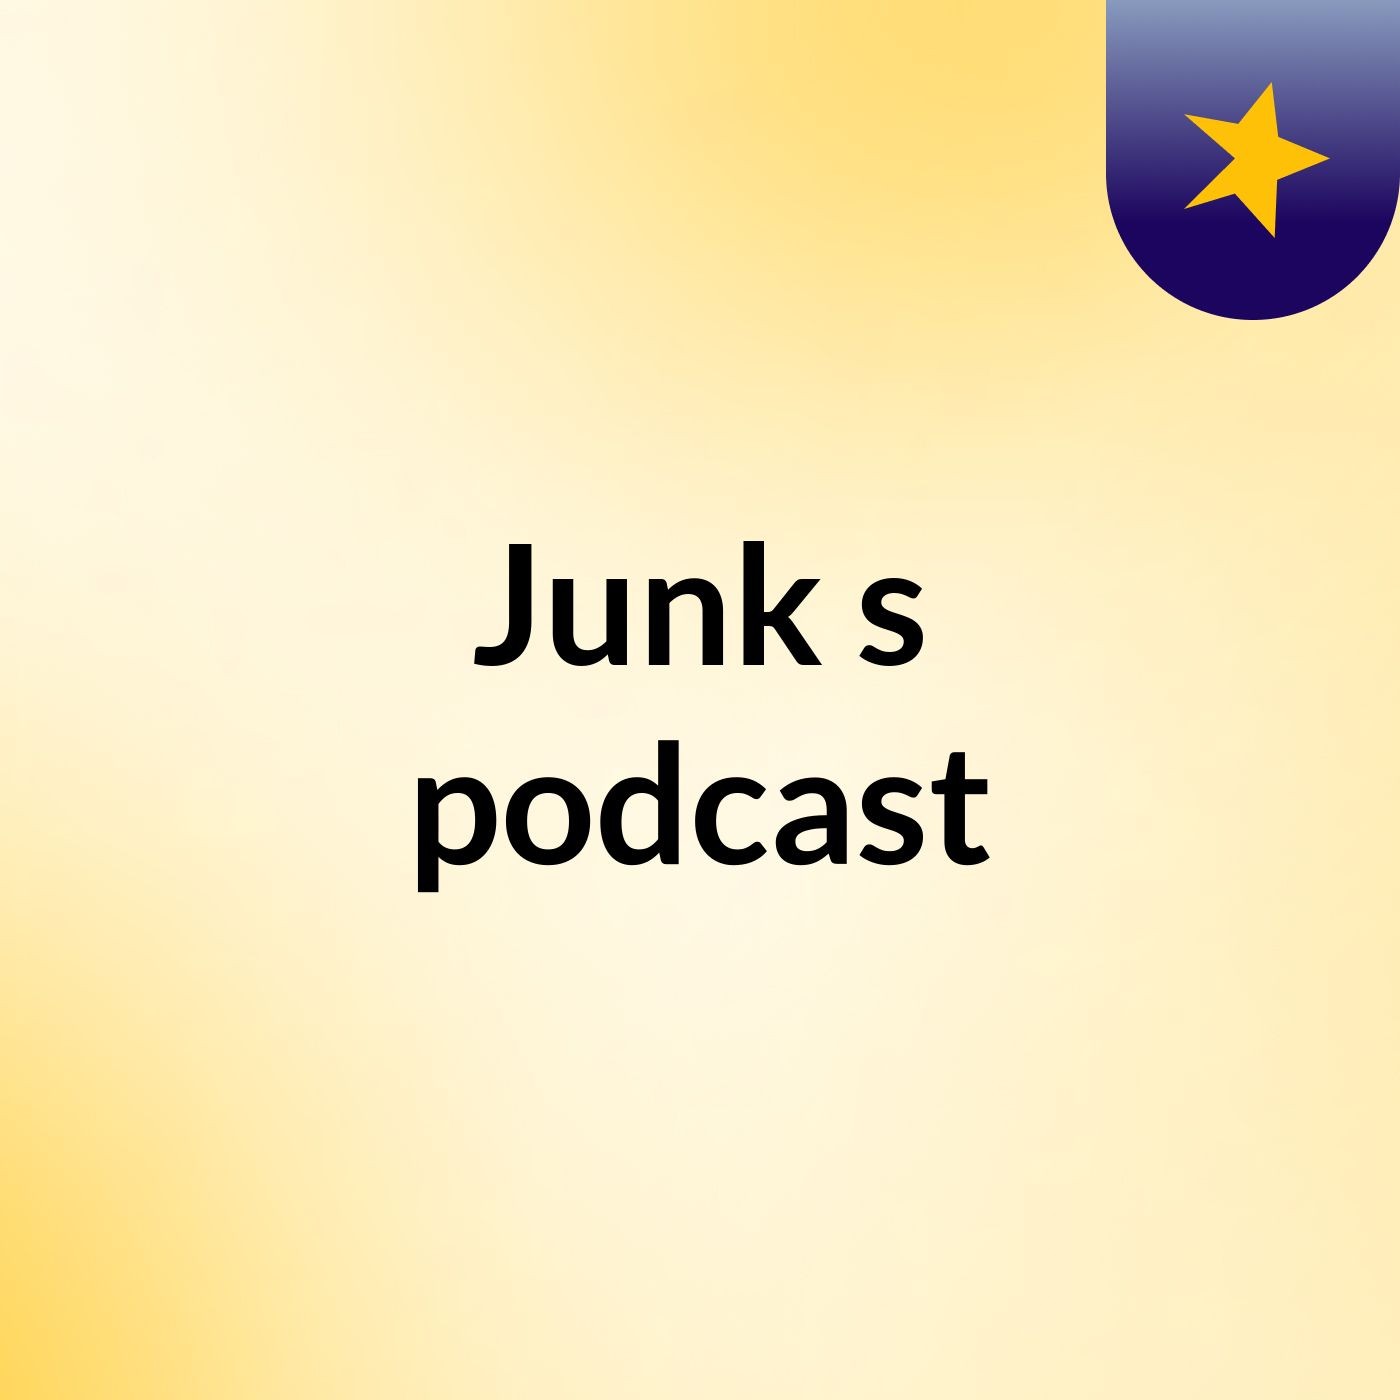 Junk's podcast